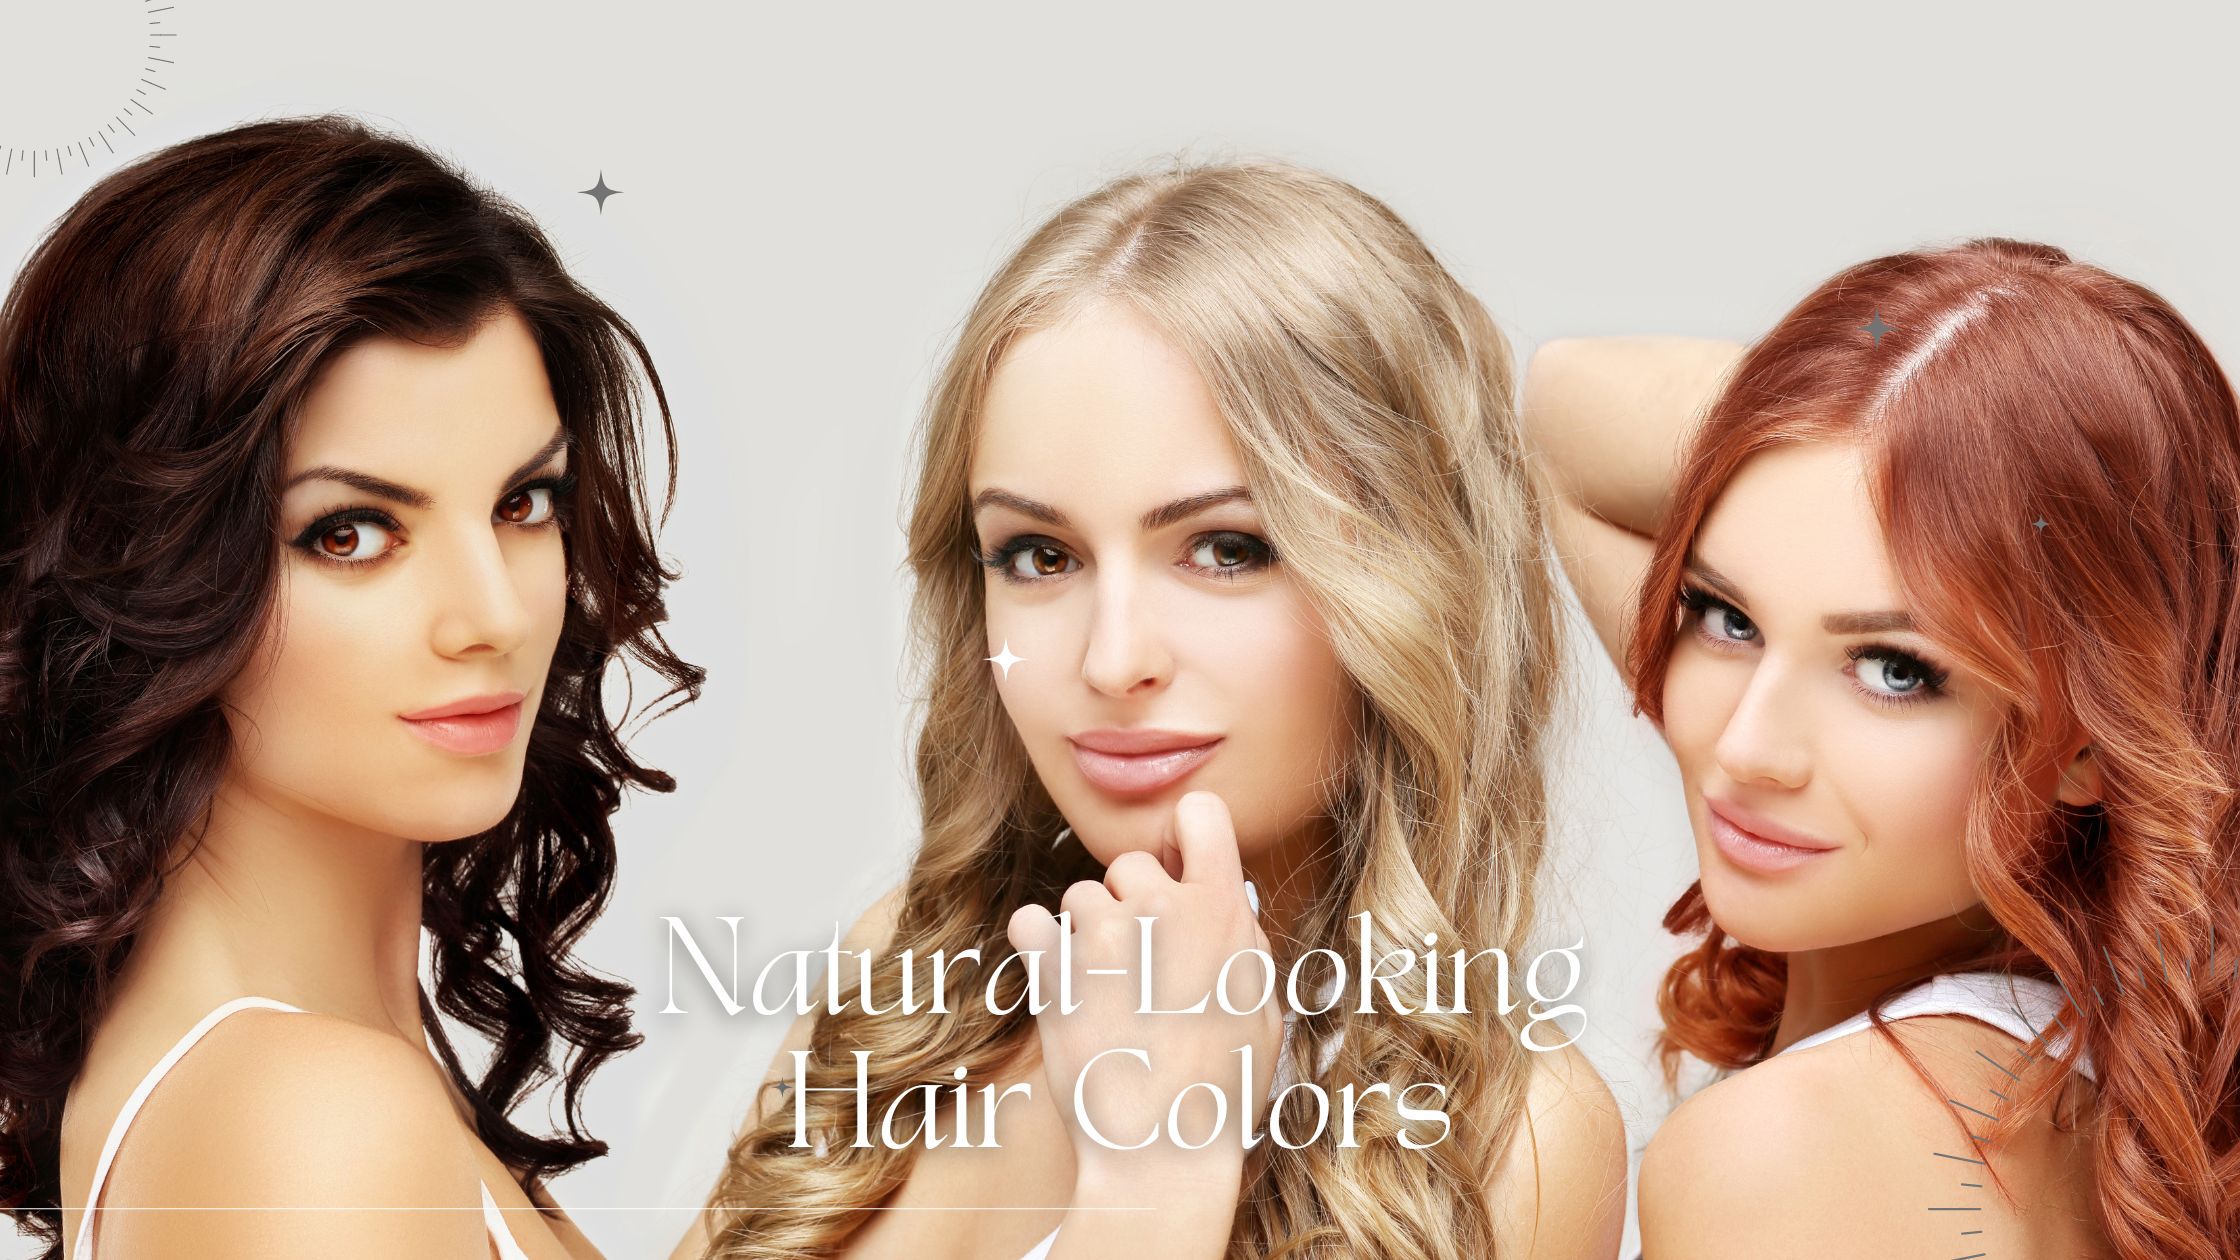 Natural Looking Hair Colors